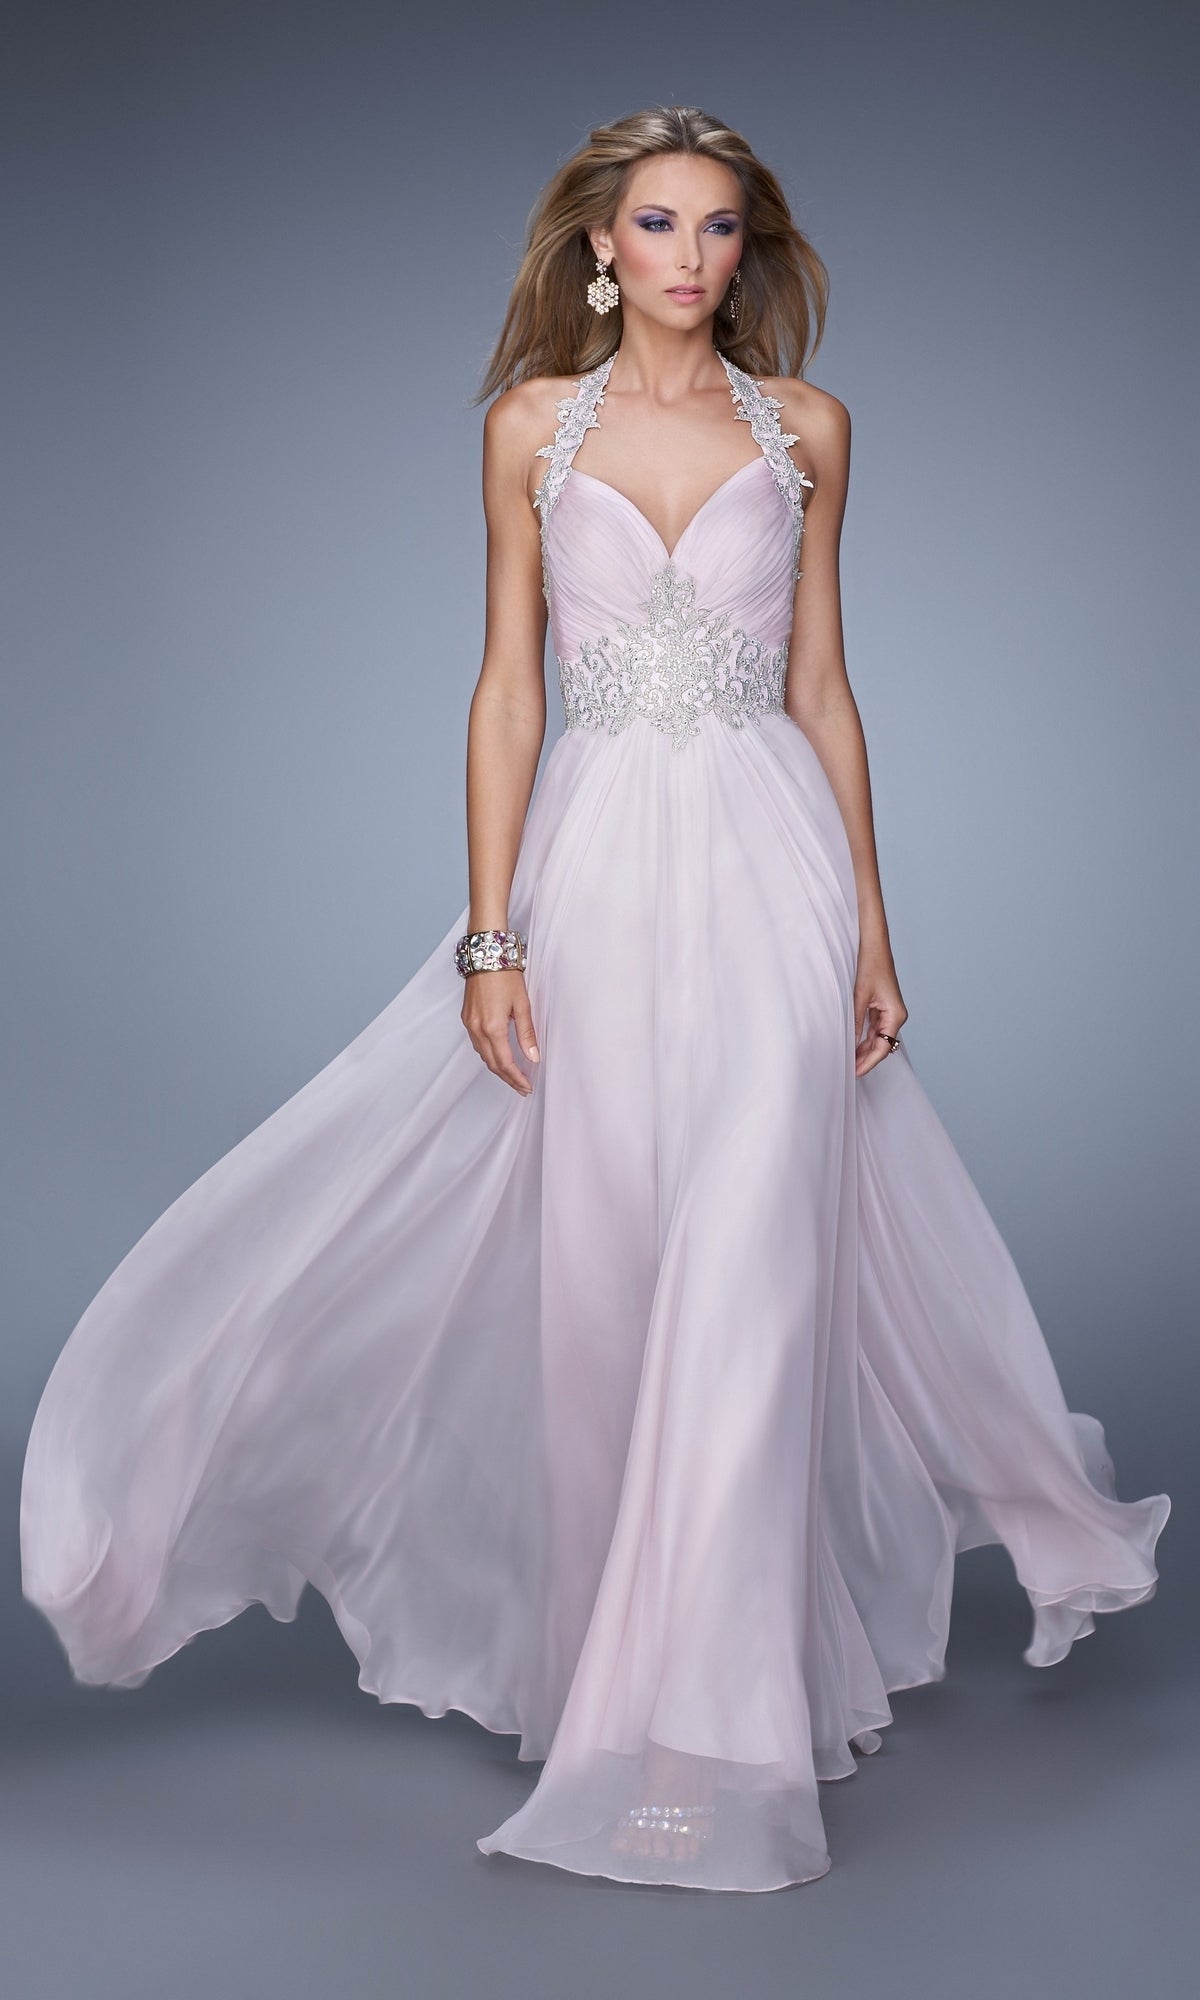 La Femme Backless Halter Chiffon Prom Dress 21161